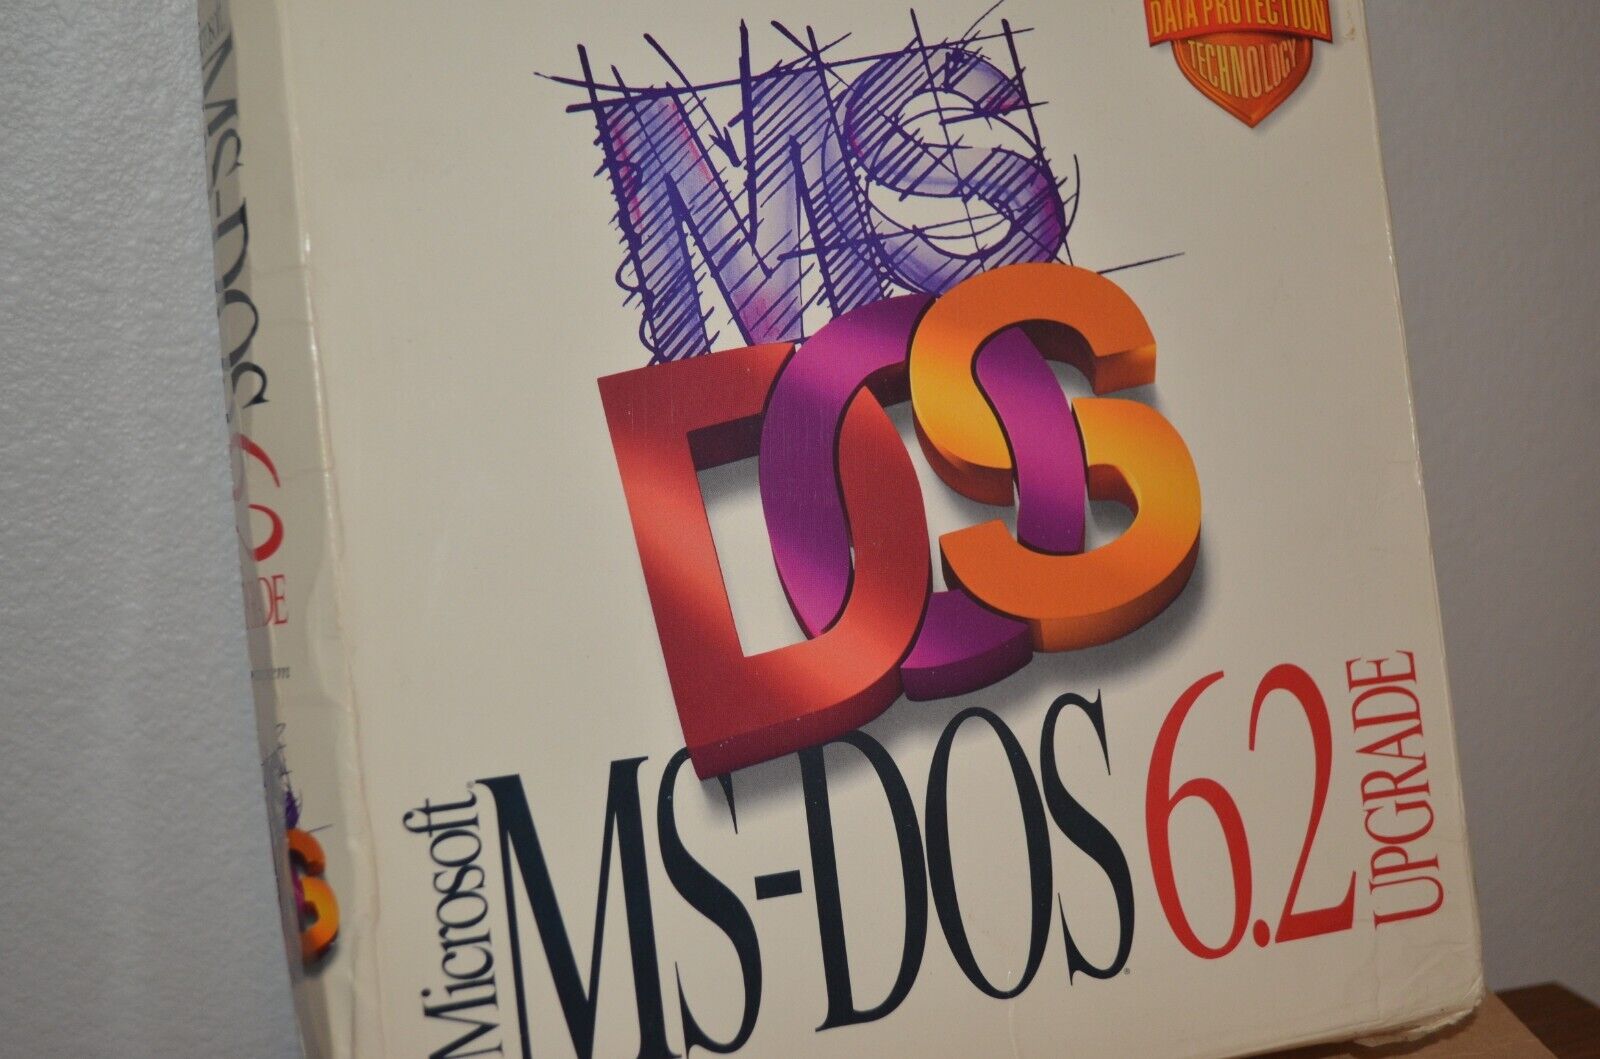 Microsoft Windows MS-Dos 6.2 OS Upgrade on 3.5